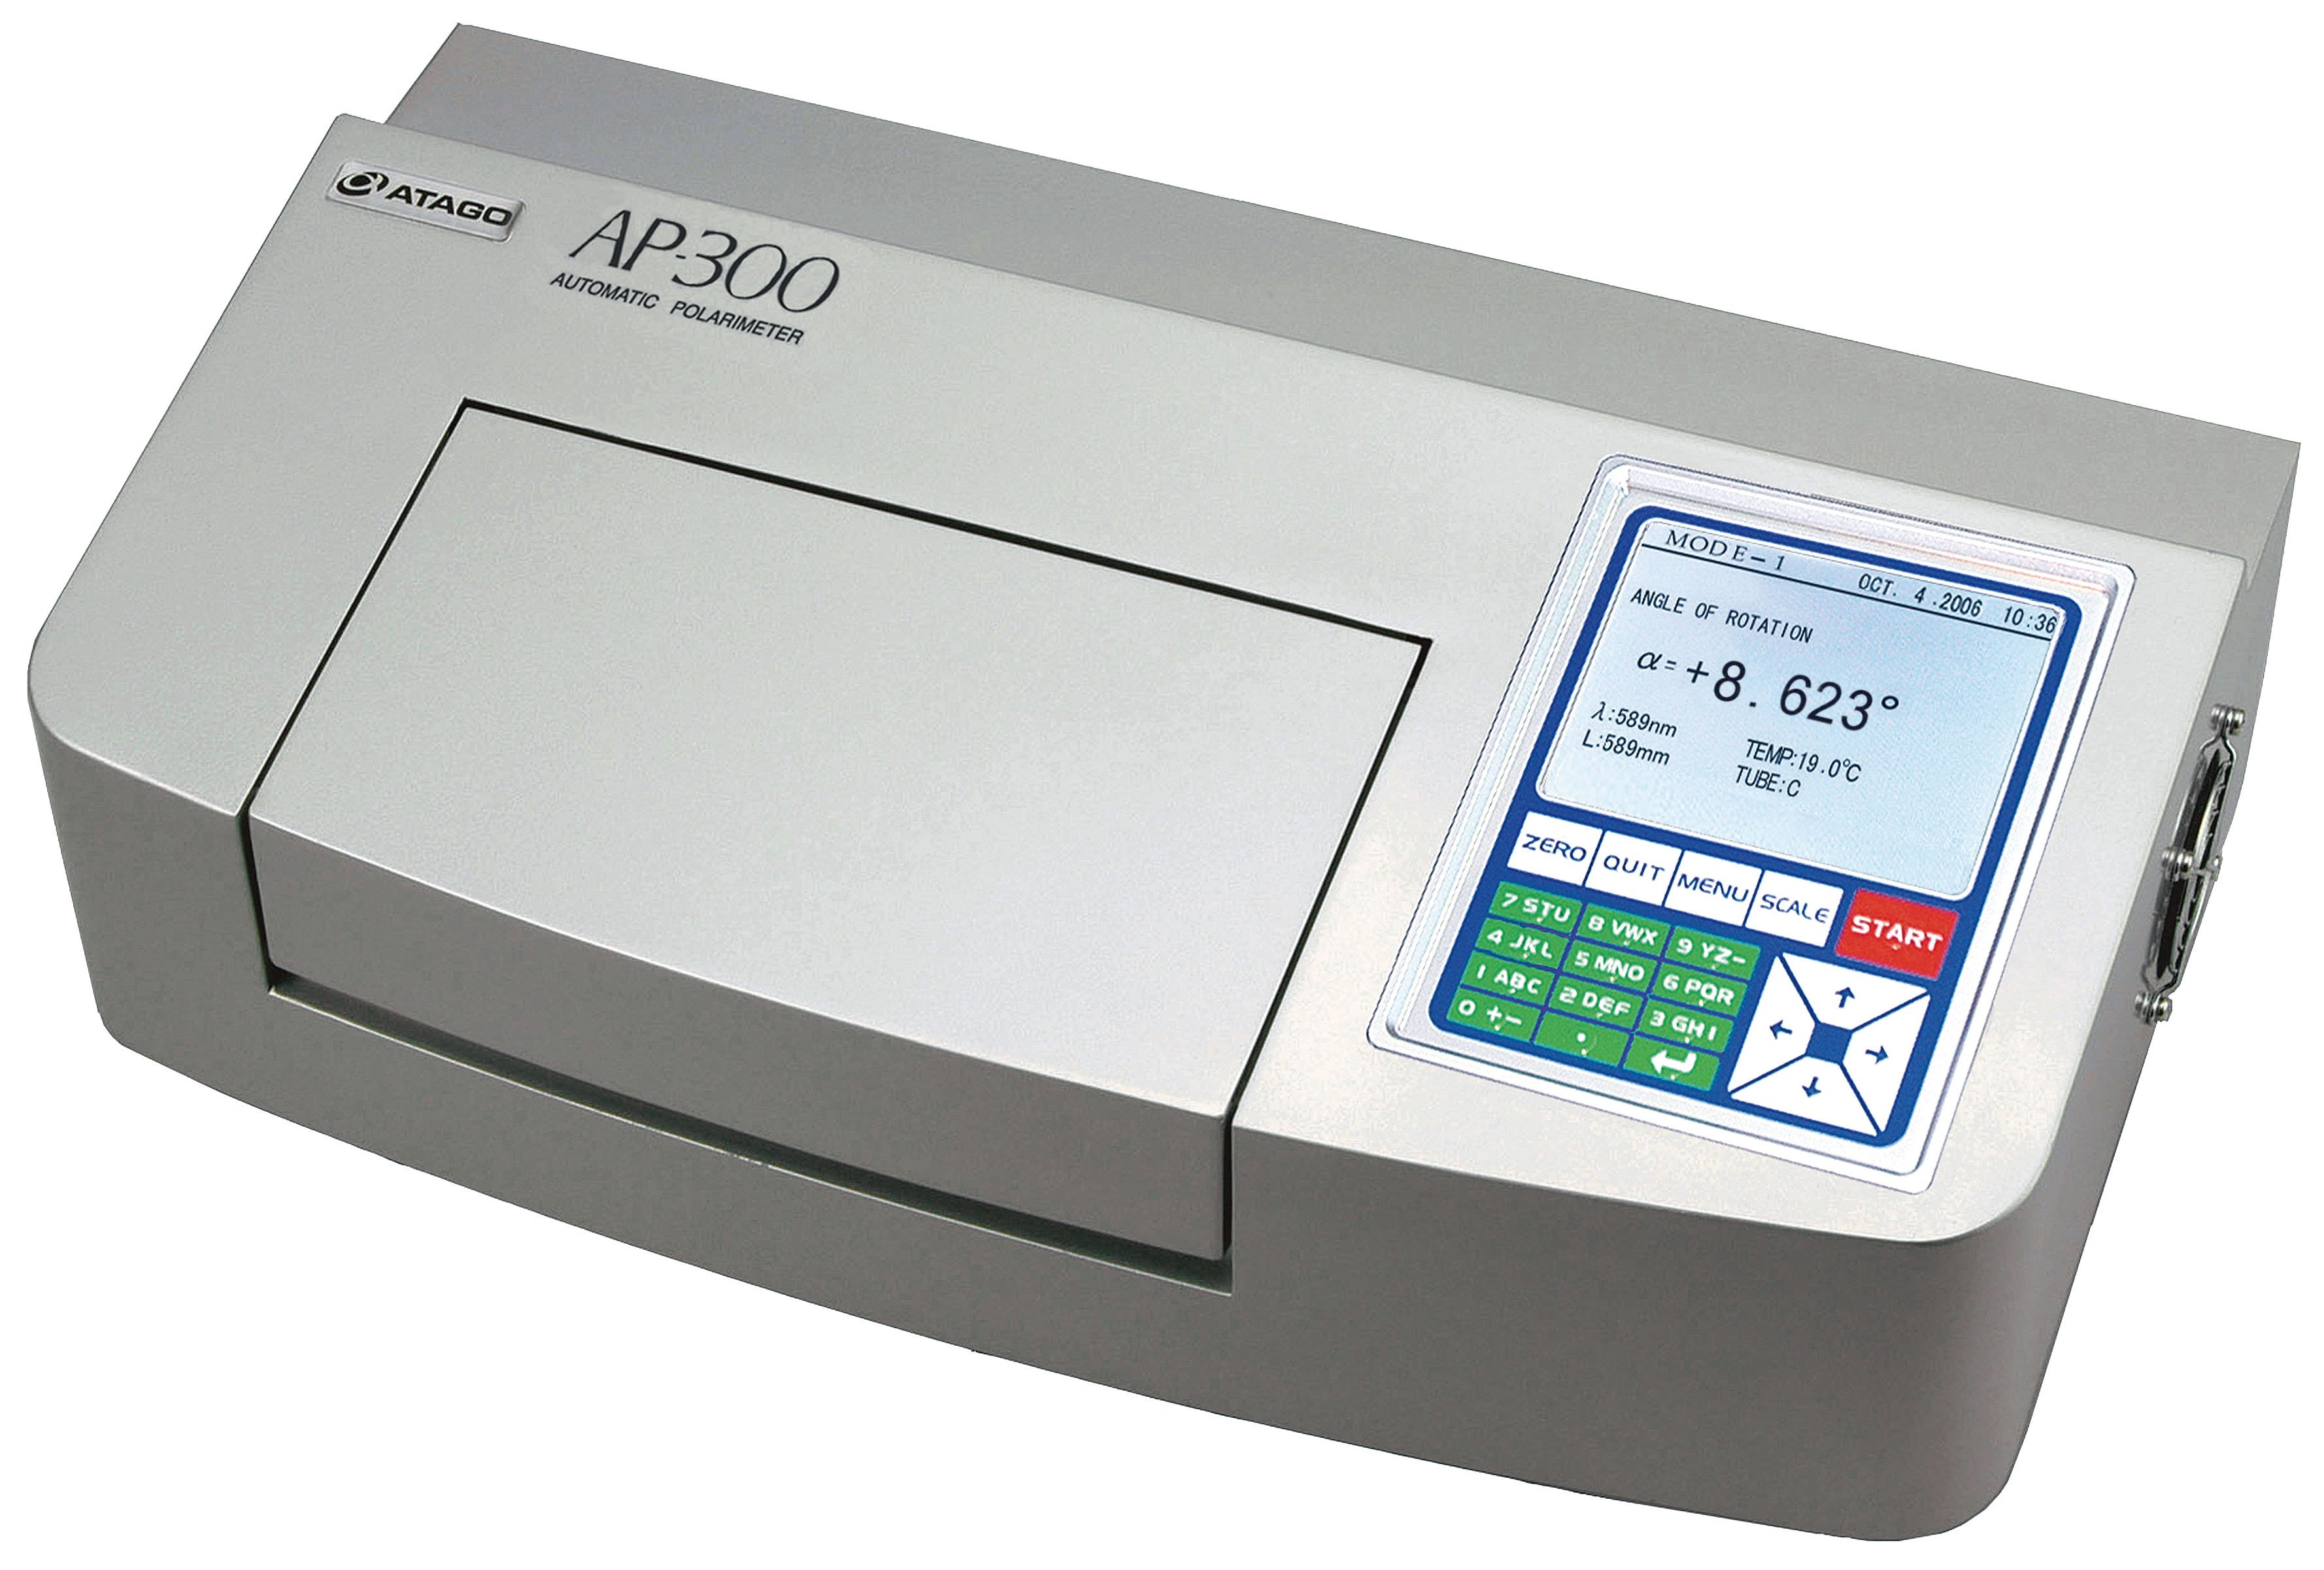 Atago 5291AP-300 Automatic Polarimeter Saccharimeter, Angle Of Rotation, International Sugar Scale